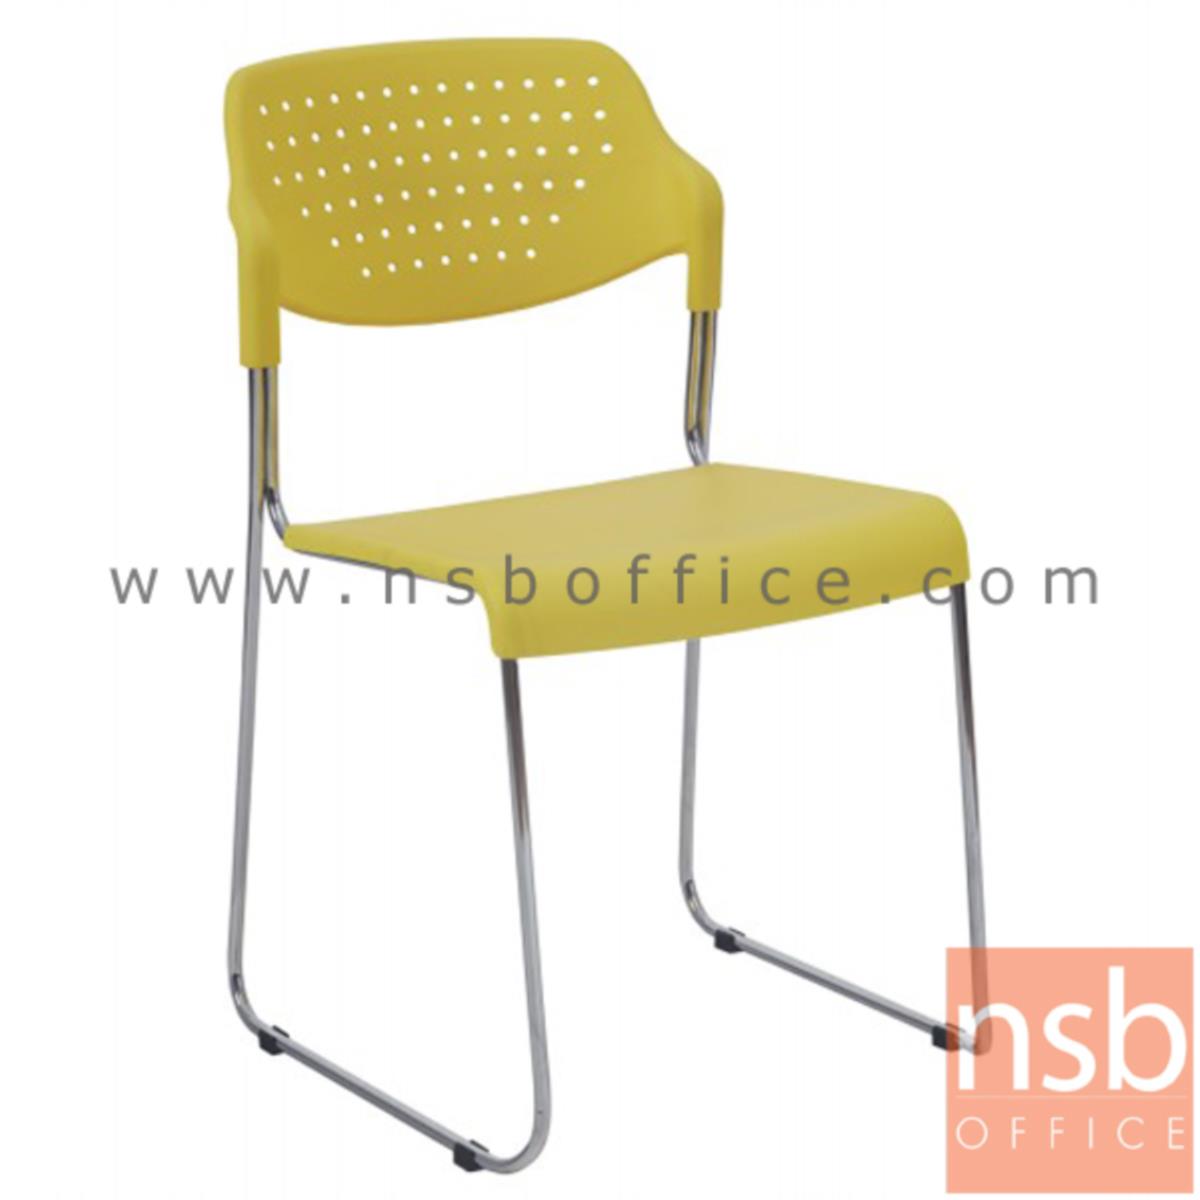 B05A103:เก้าอี้อเนกประสงค์เฟรมโพลี่ รุ่น Sweetcorn (สวีทคอร์น)  ขาตัวยูชุบโครเมี่ยม